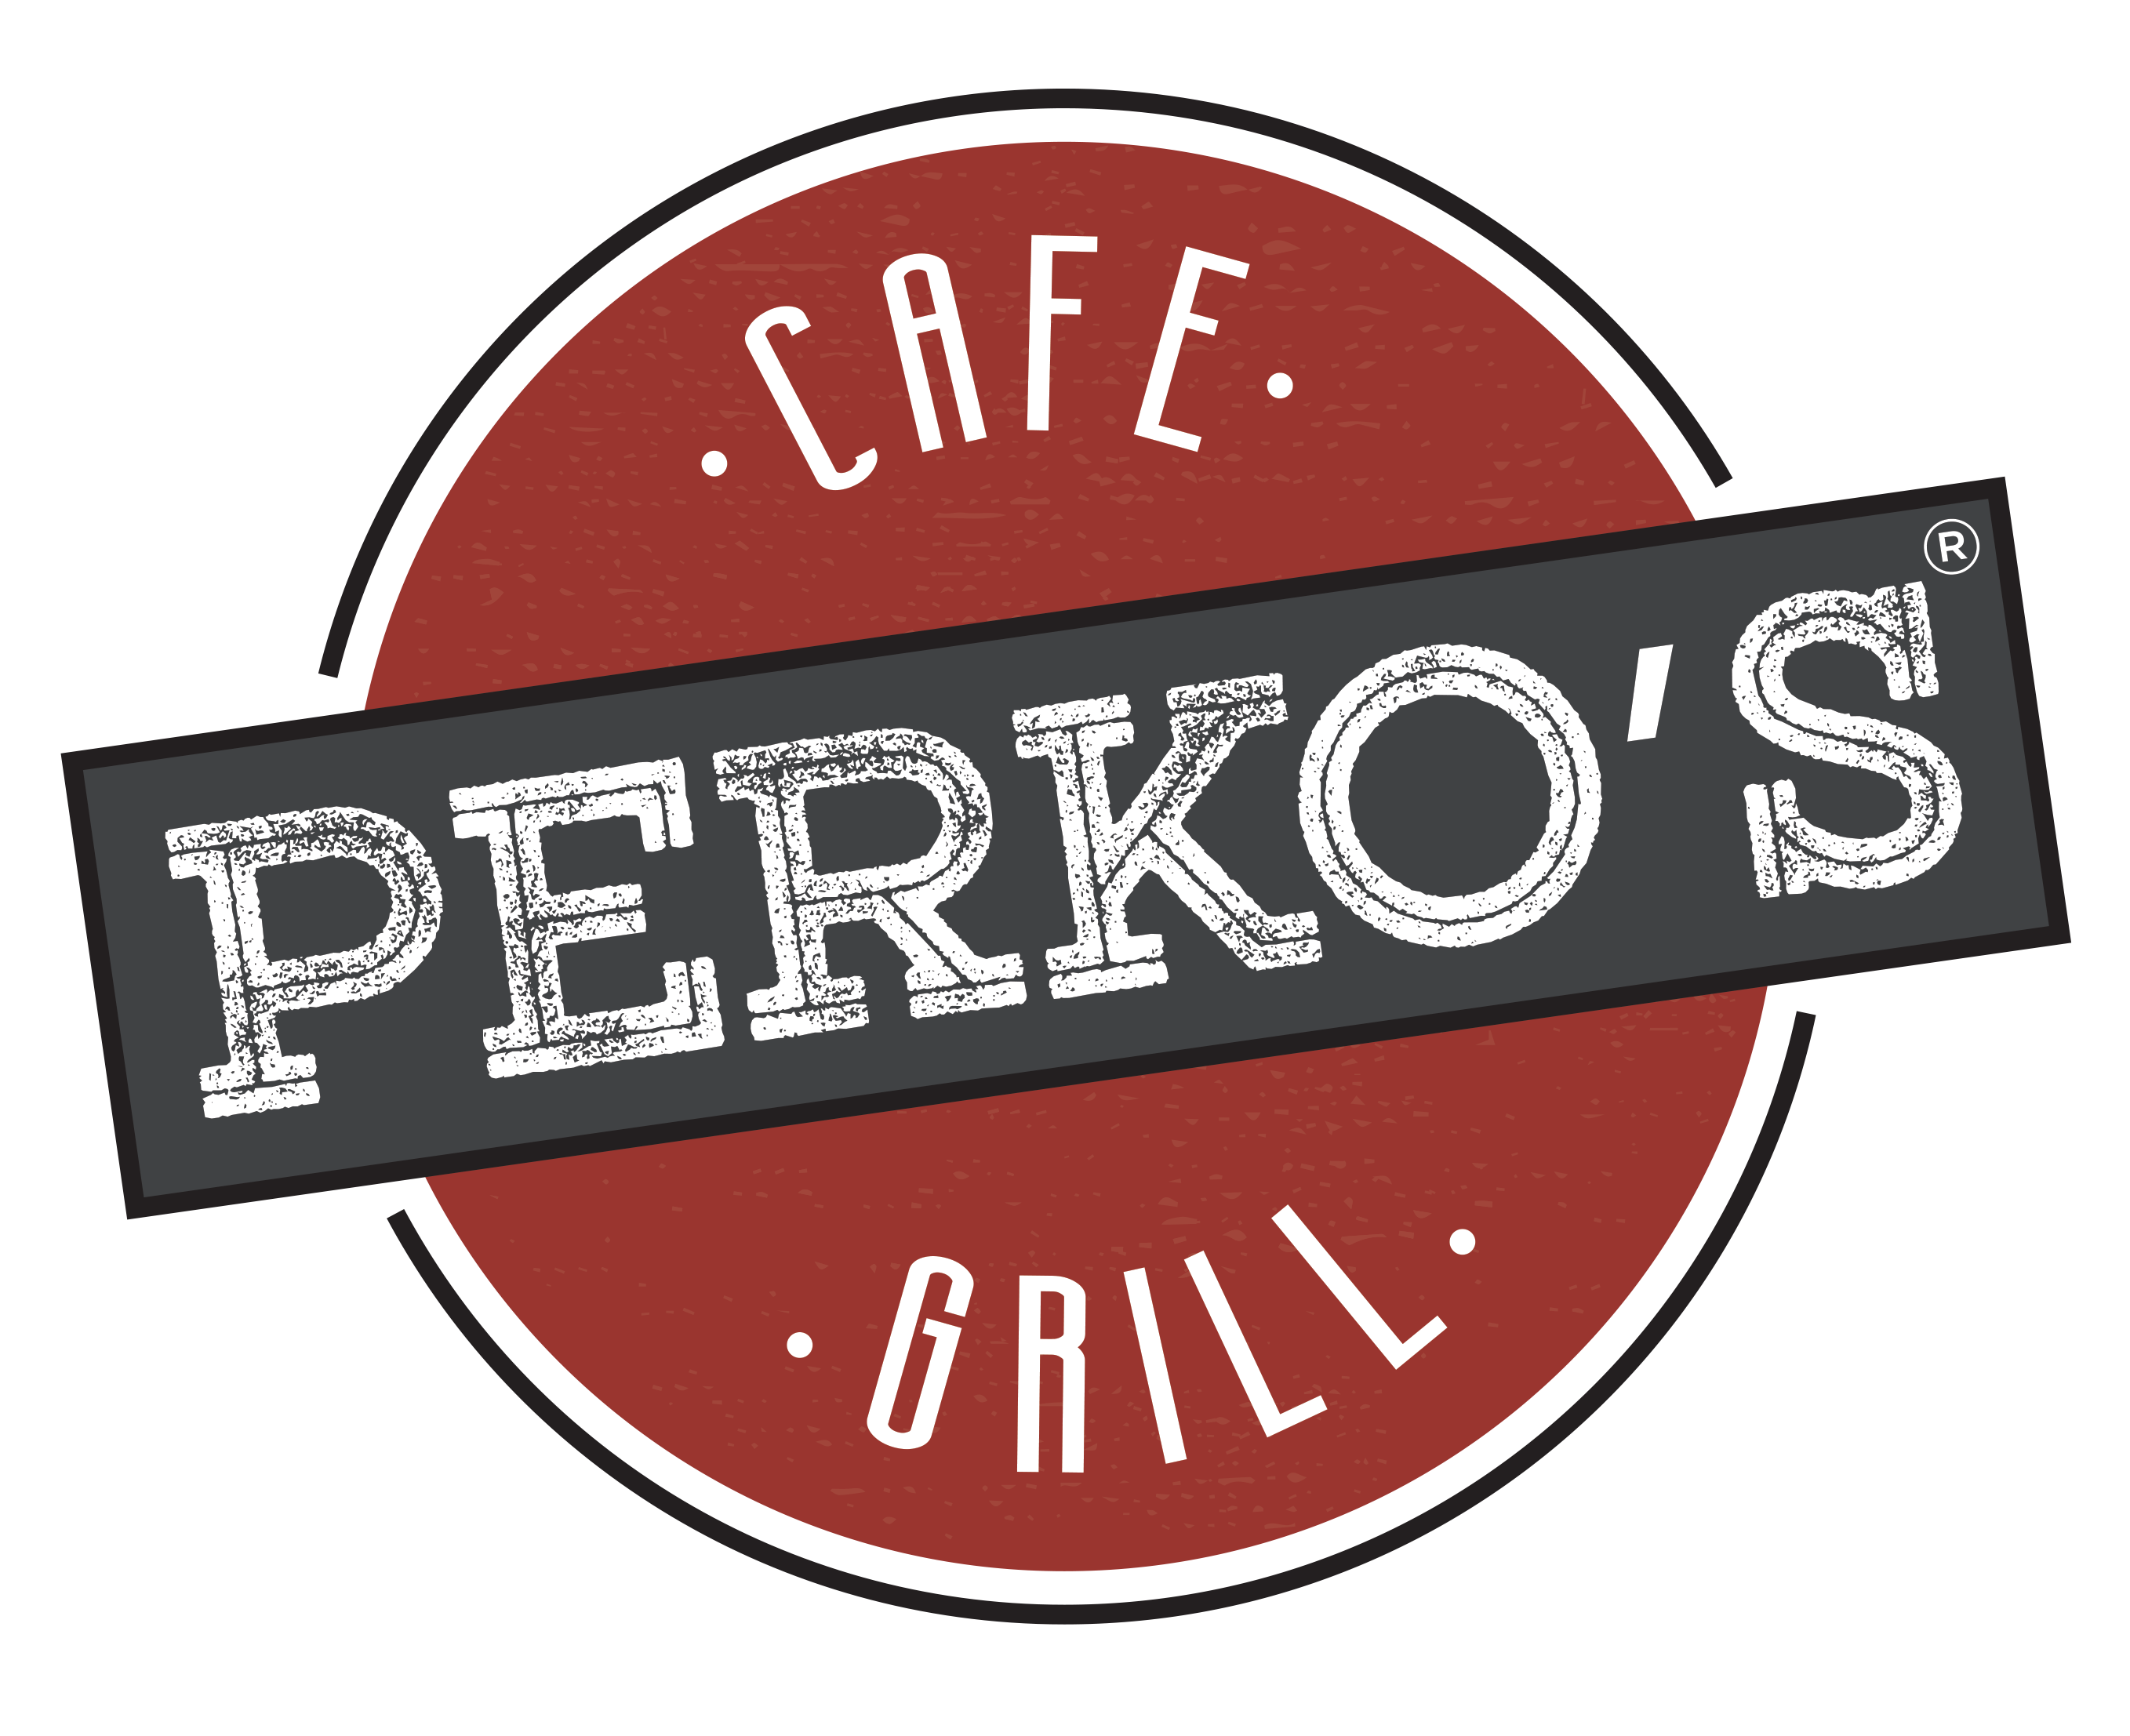 Perko's Farm Fresh Cafe Grill logo